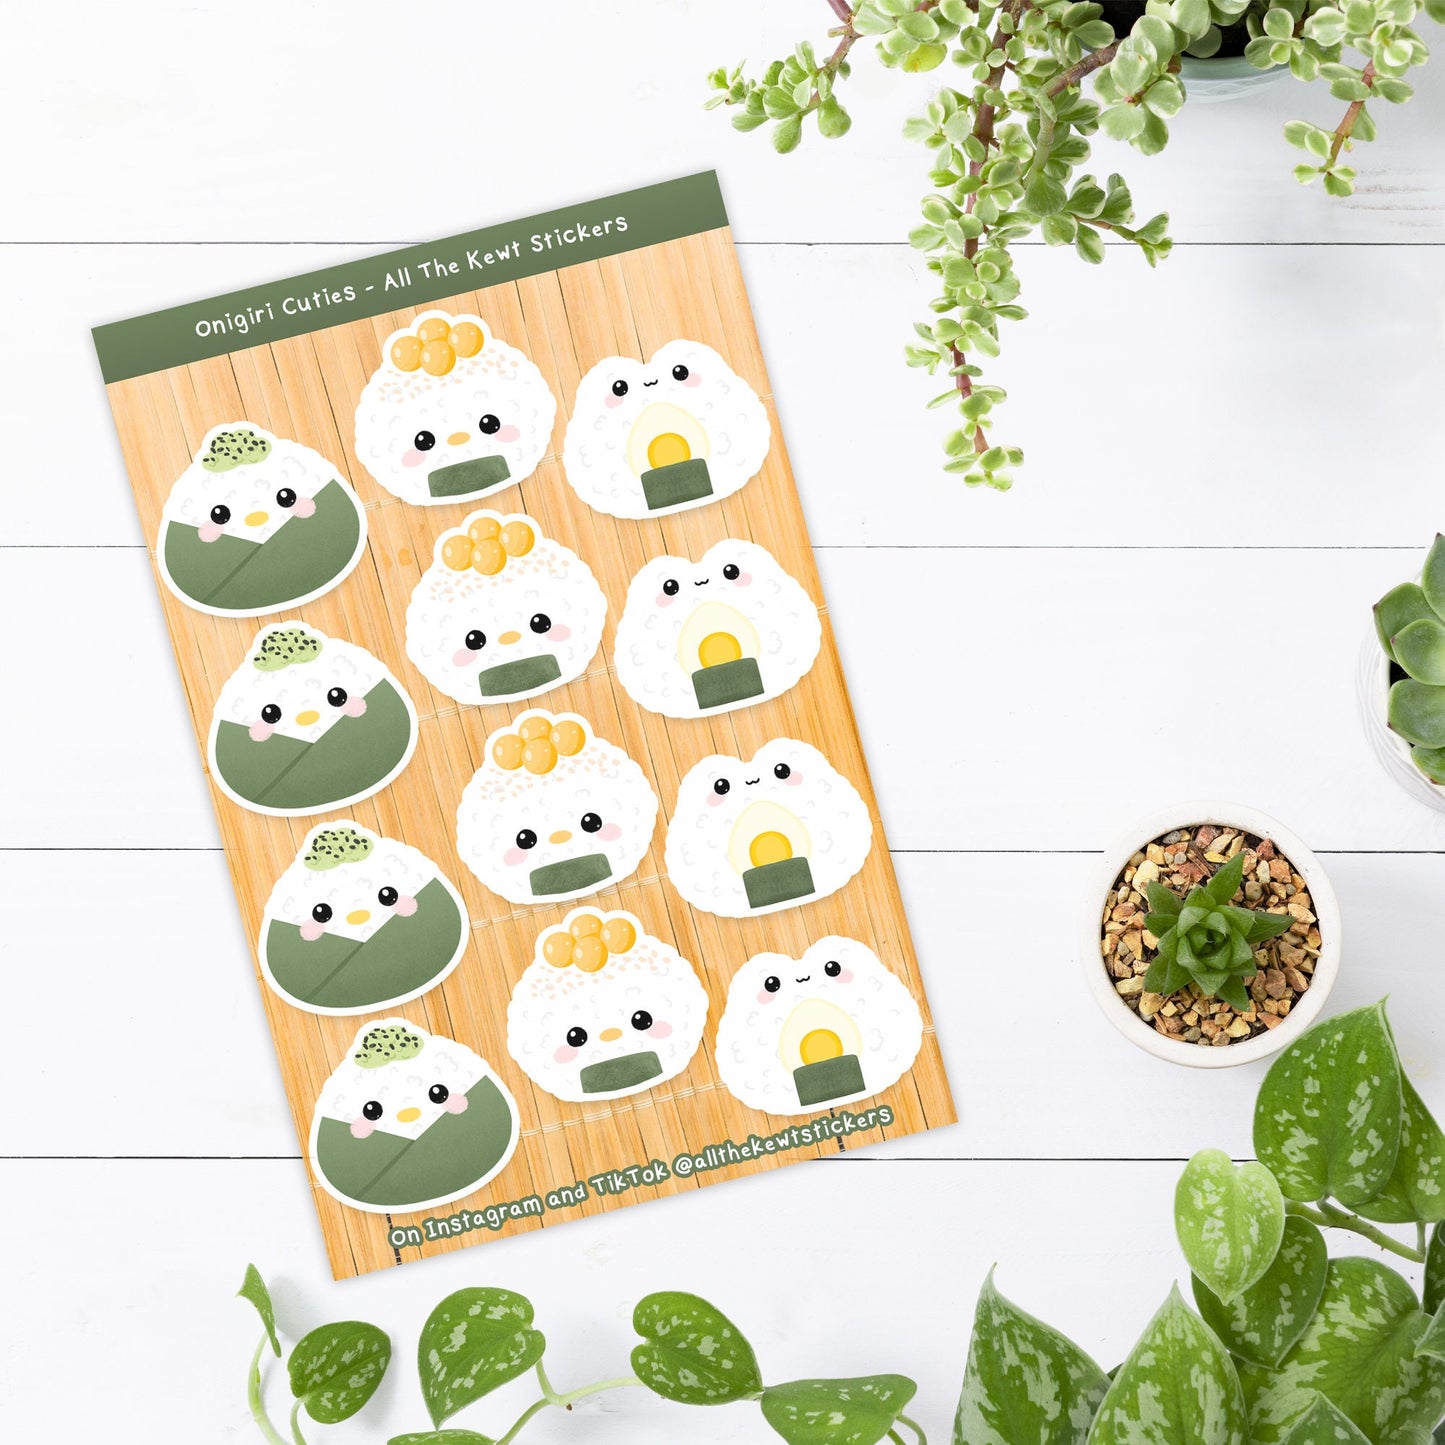 Onigiri Kawaii Sticker Sheets, Cute Onigiri Frog Stickers, Rice Ball Stickers, Seaweed Rice Balls, Holographic or Matte Stickers Sheet 2